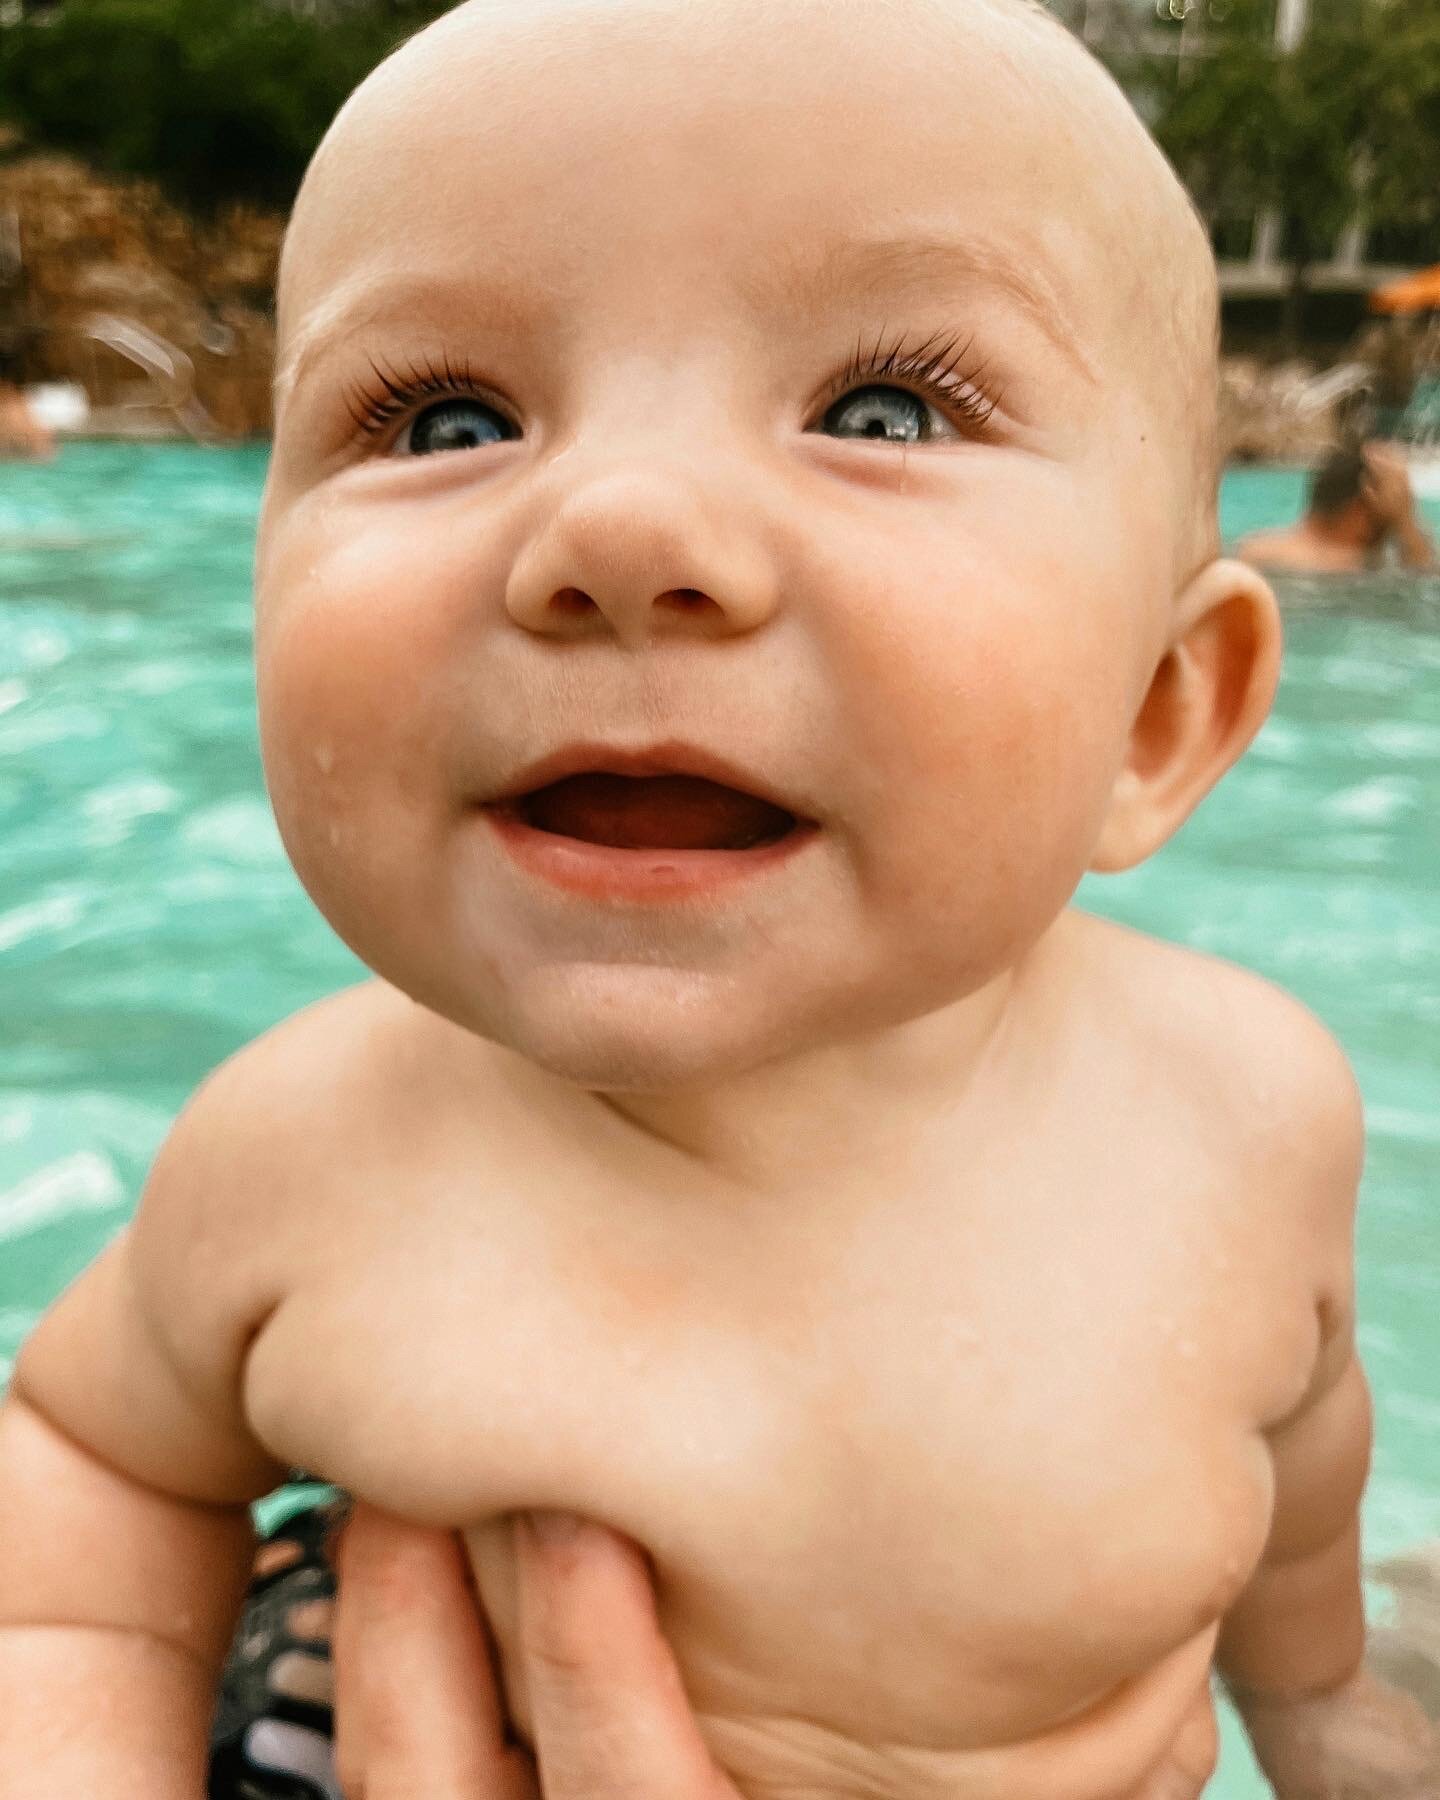 baby swimming pool